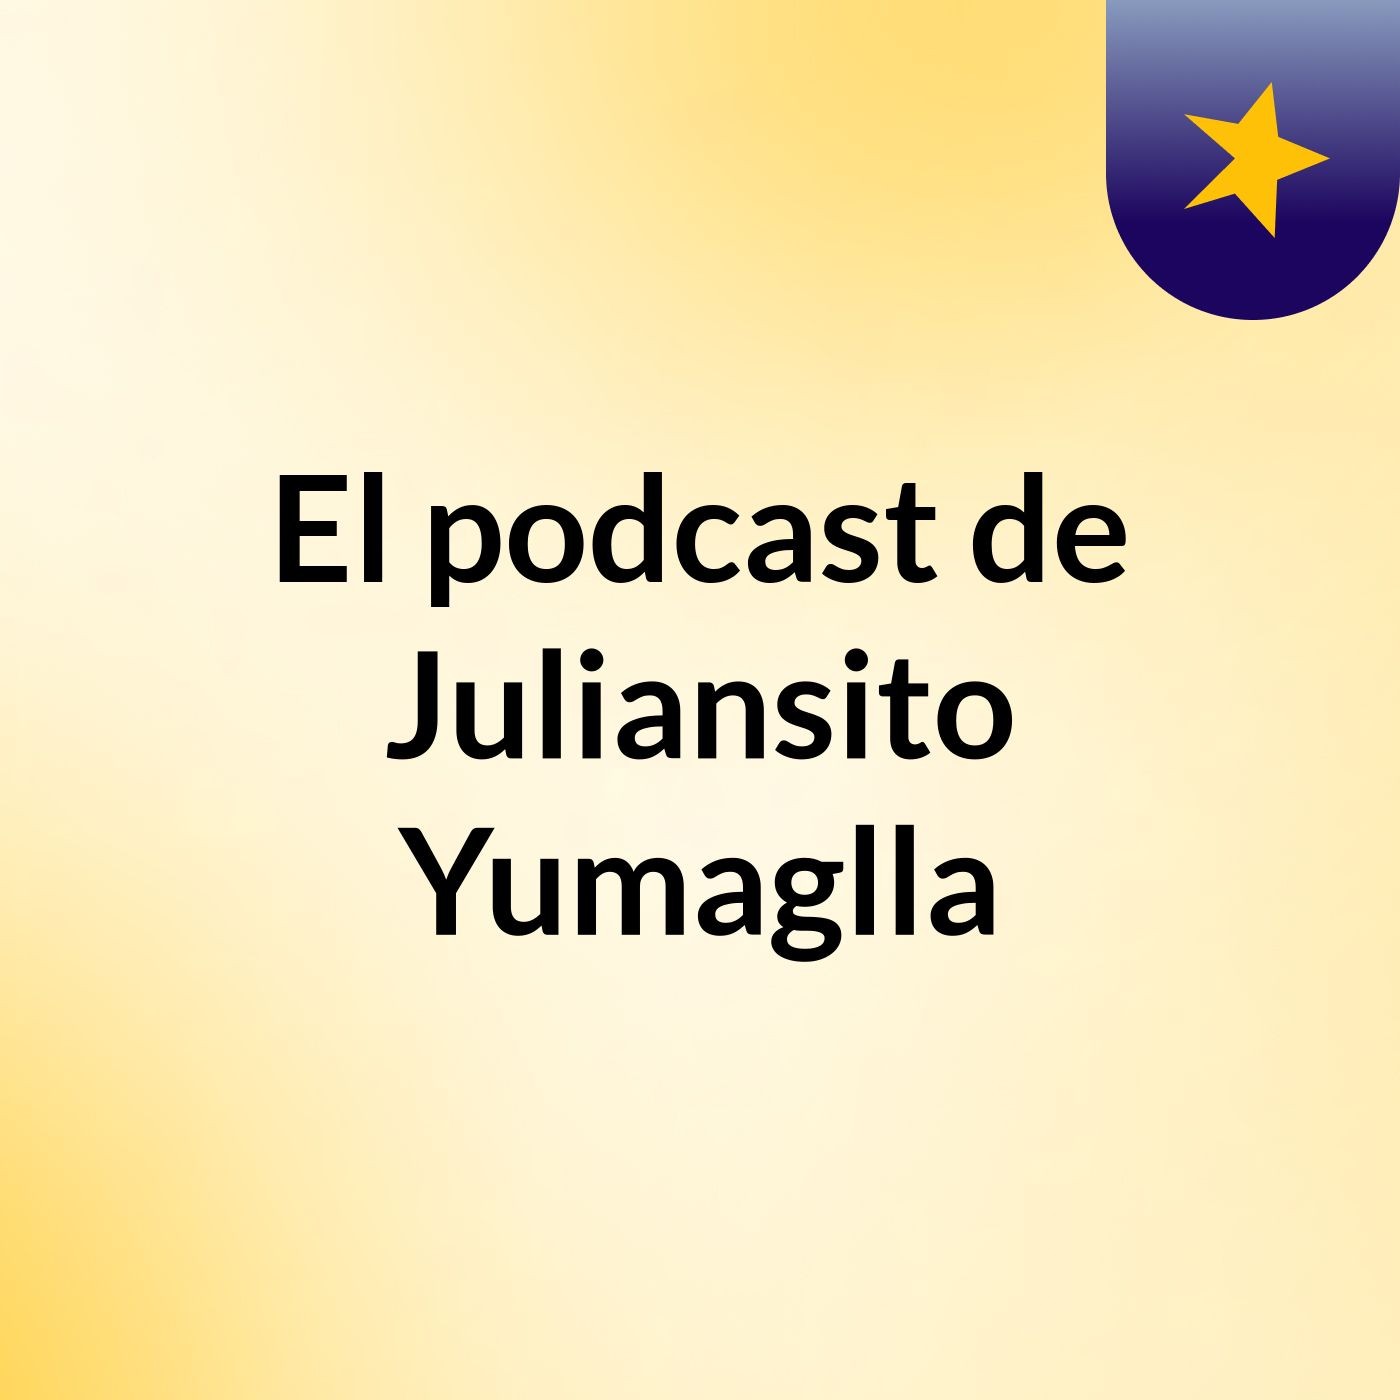 El podcast de Juliansito Yumaglla